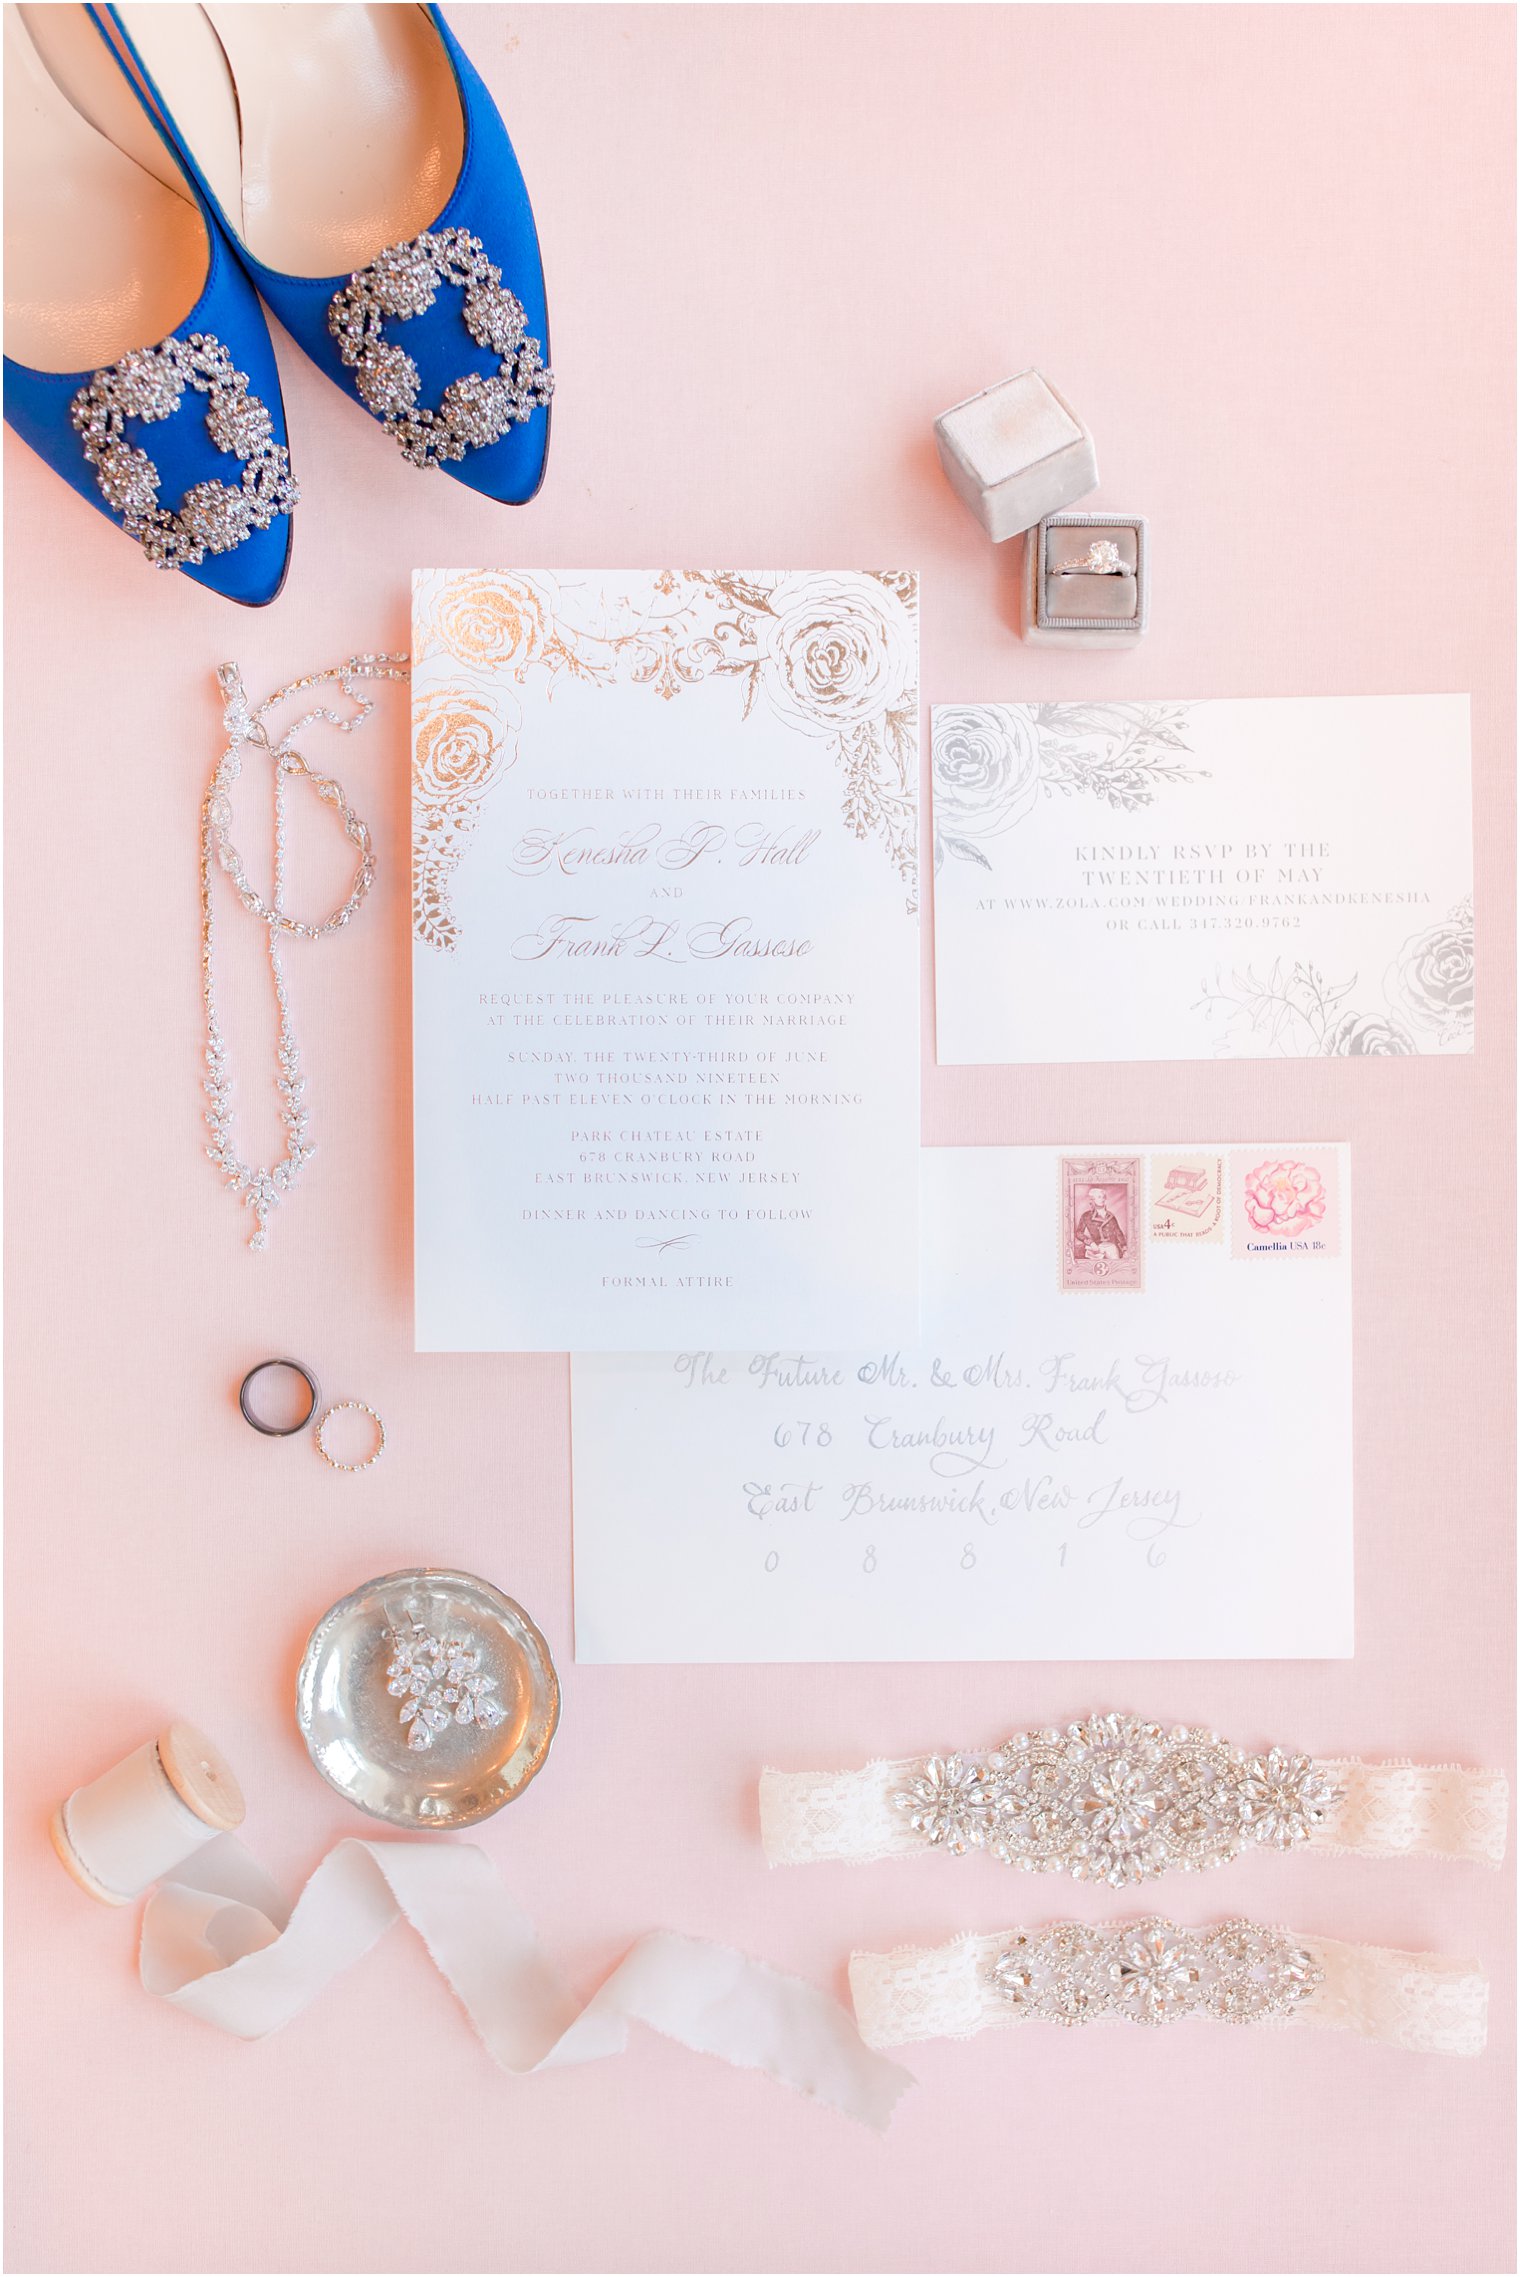 Wedding invitation for a classic Park Chateau Estate Wedding